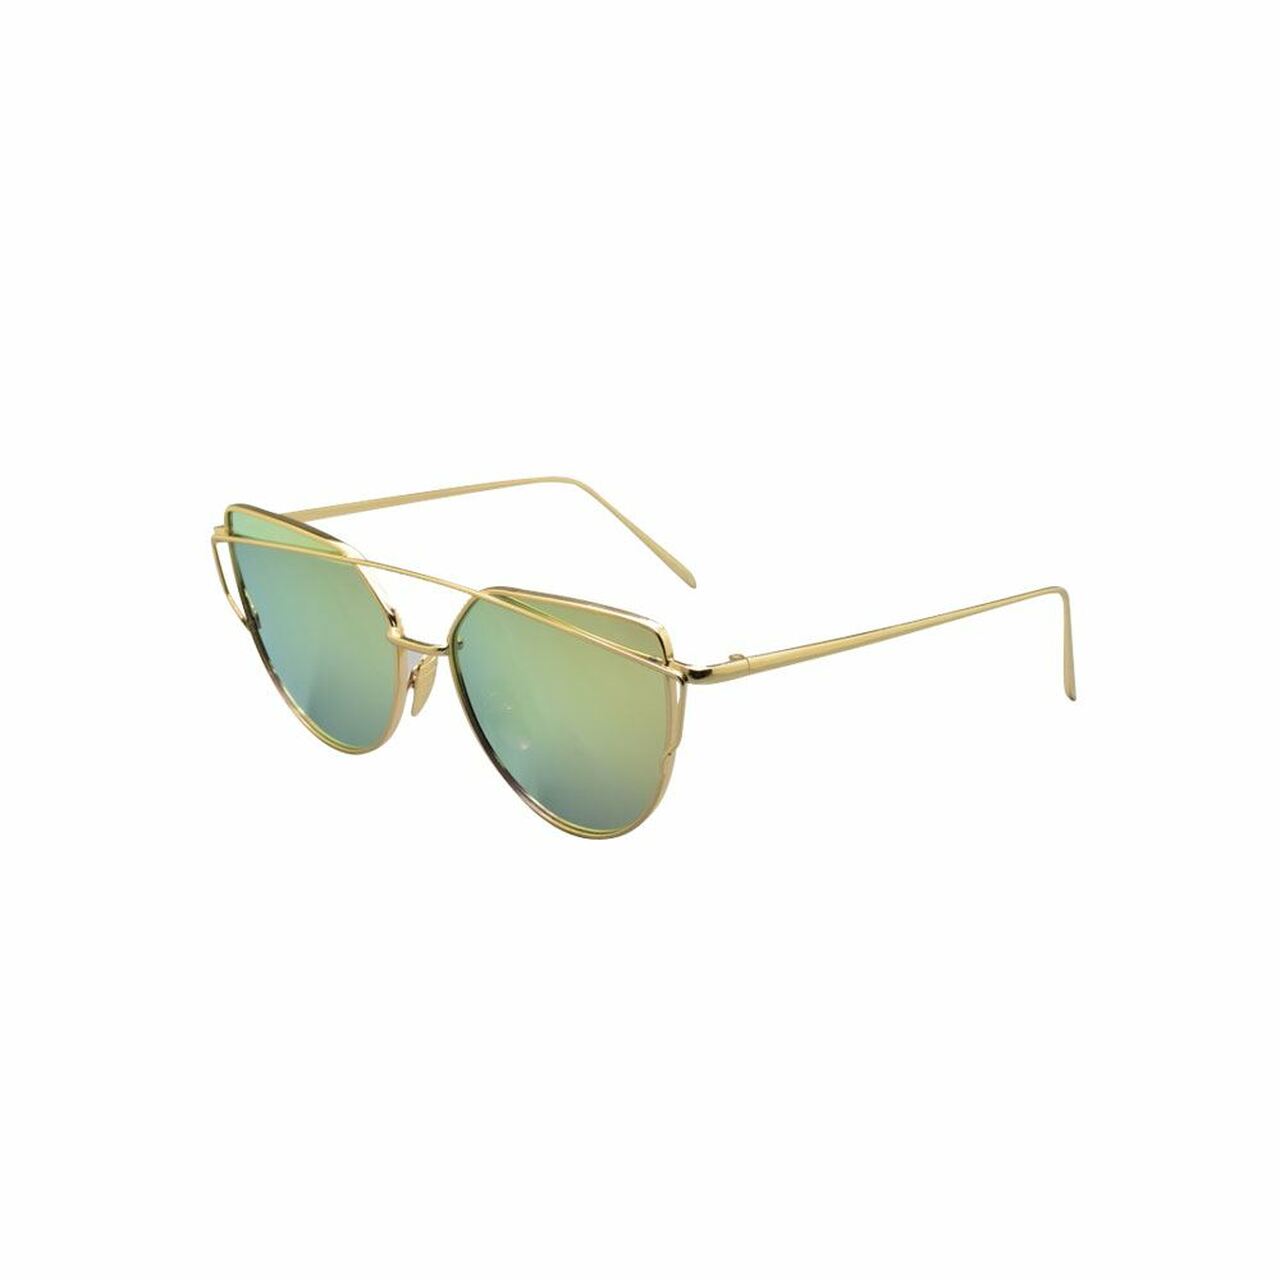 Polarised Cat Eye Sunglasses Classic Designer Twin-Beams Sunglasses